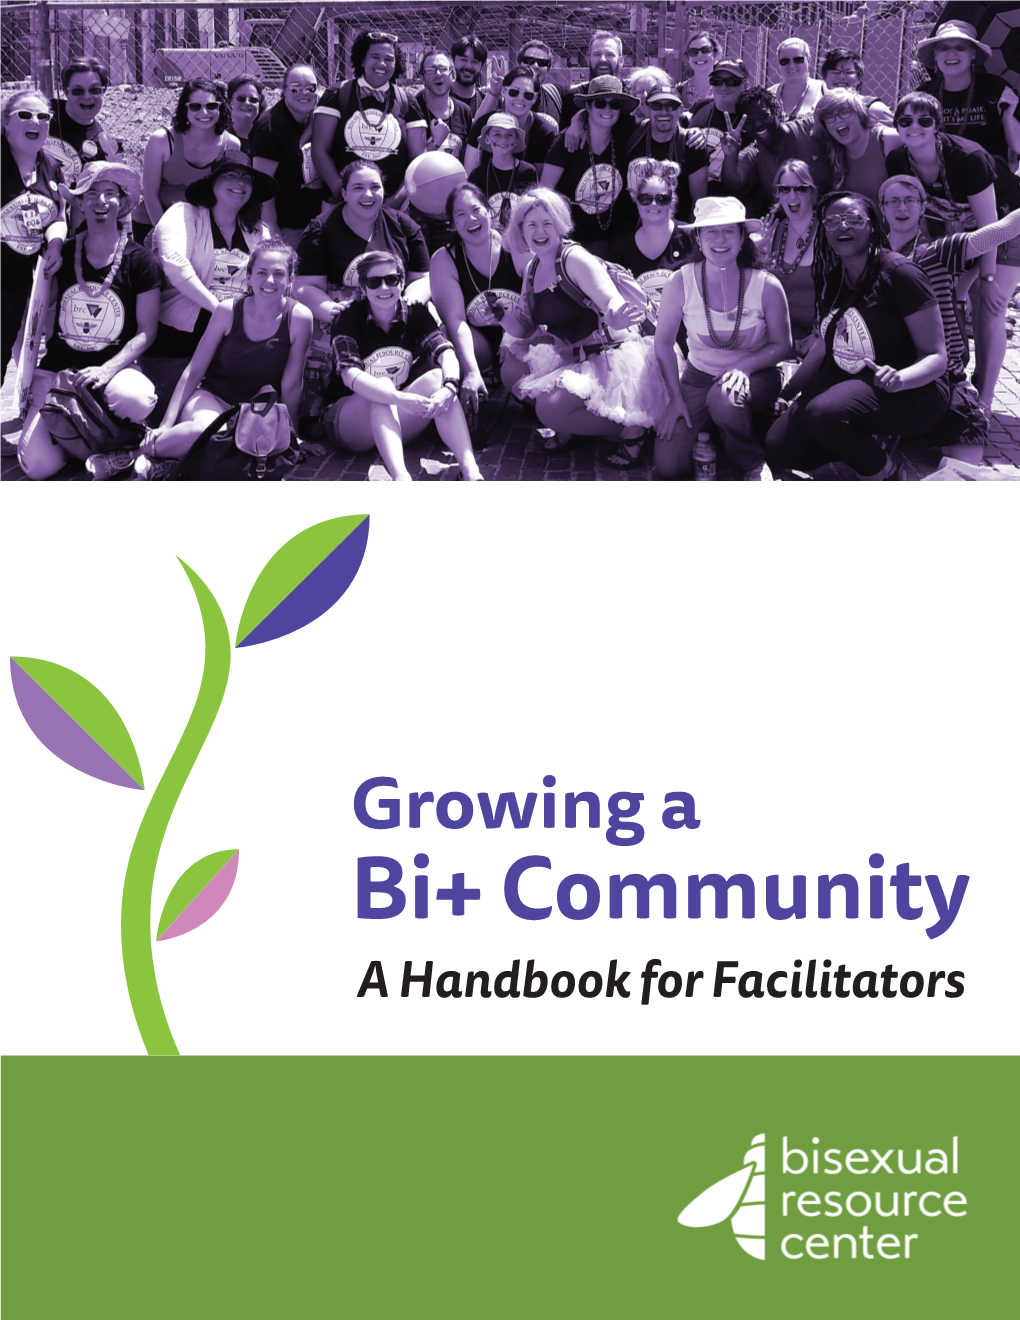 Growing Bi+ Community: a Handbook for Facilitators